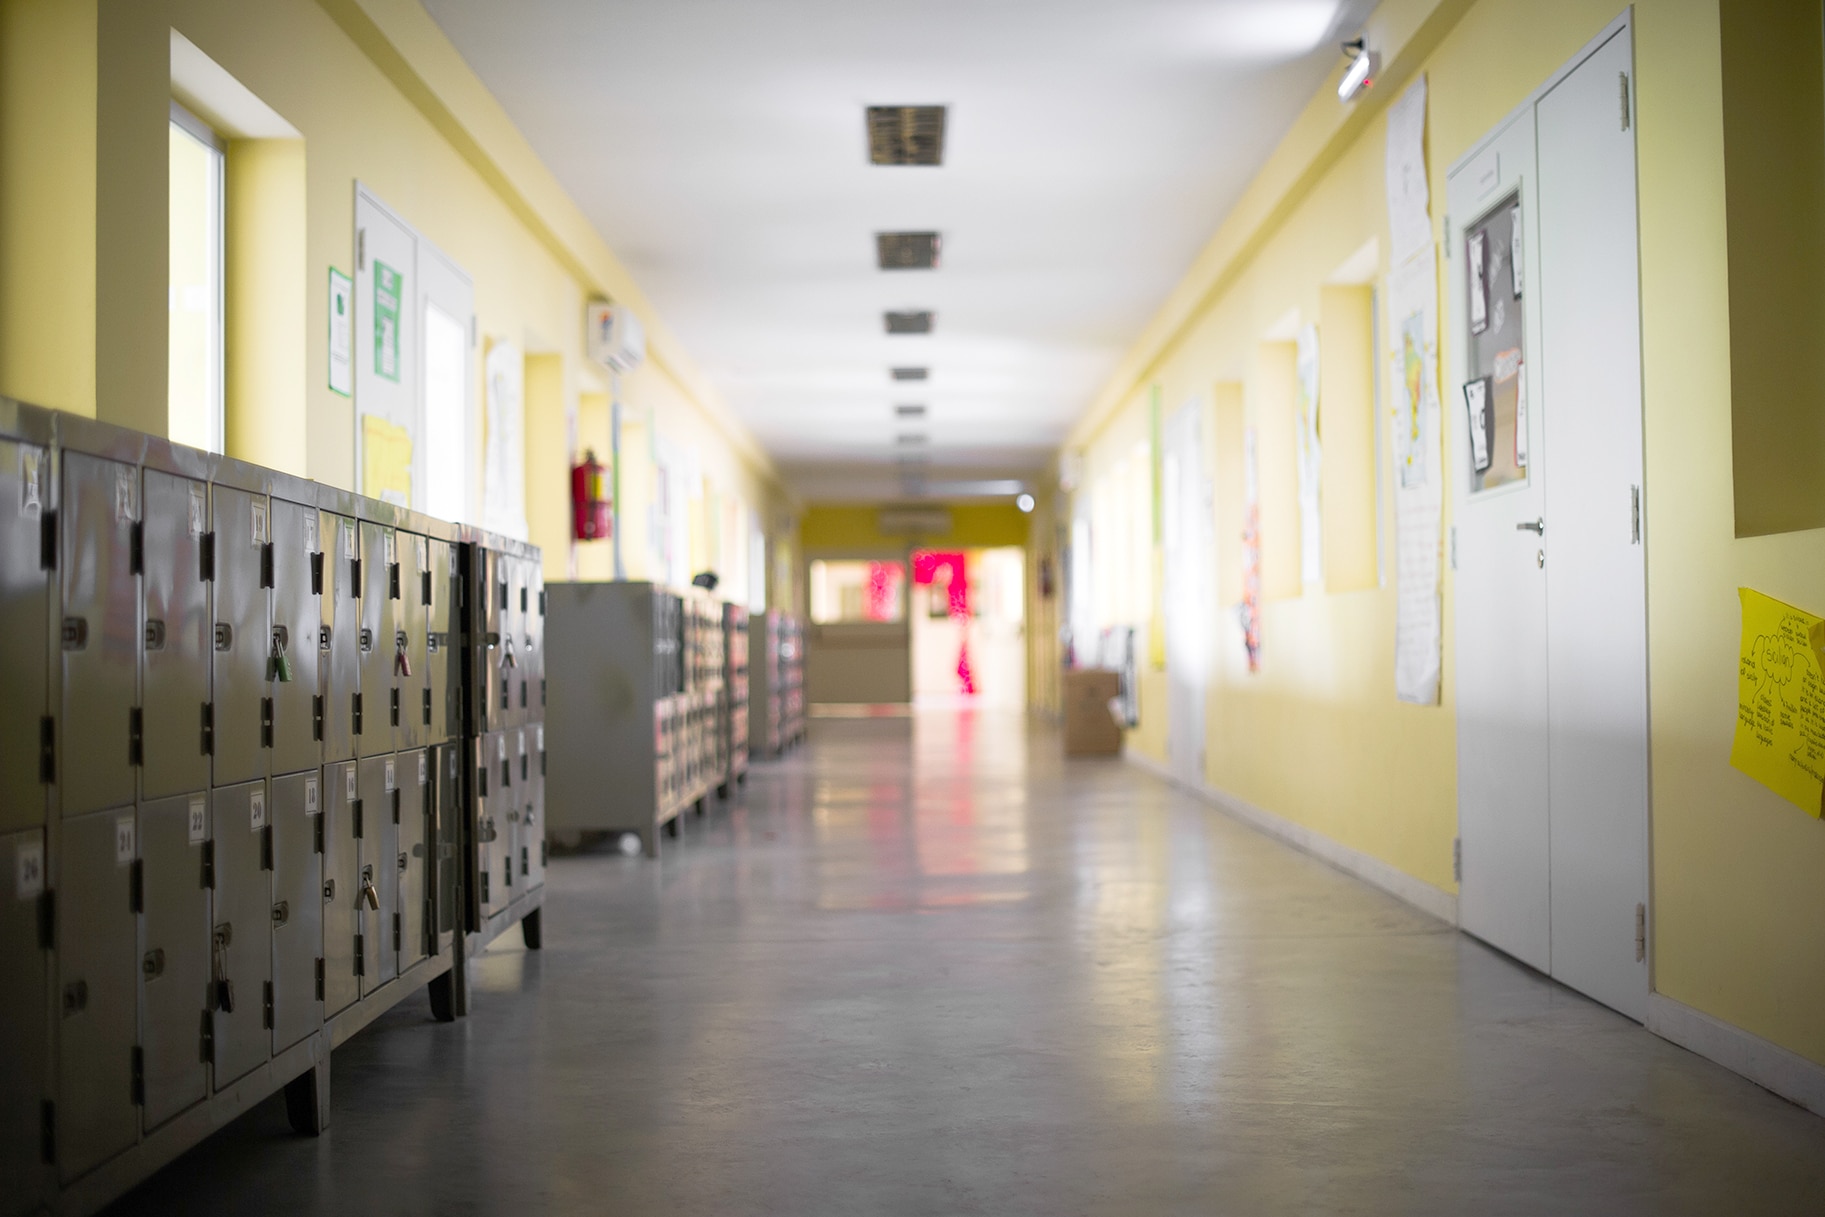 An Empty School Hallway with lockers